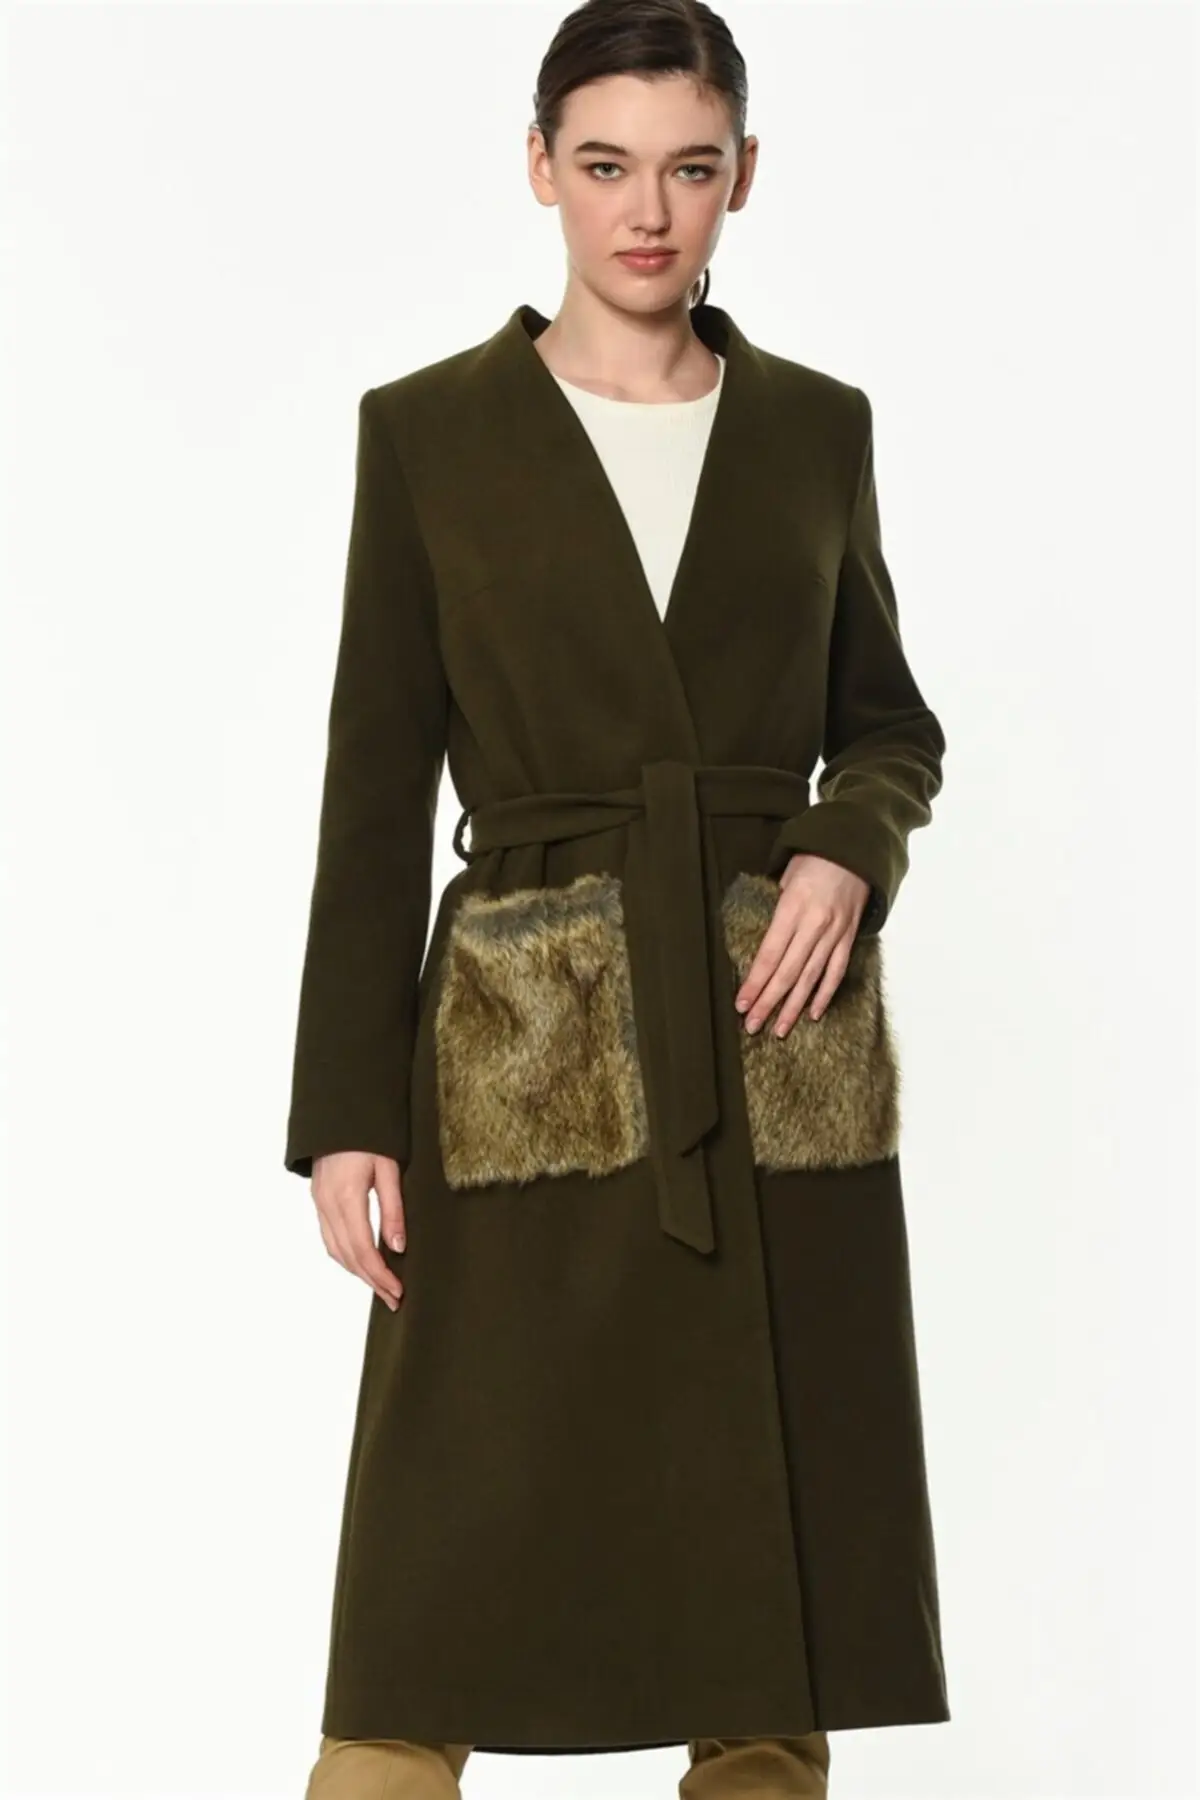 Women's Coats Khaki Color Long Sleeve Patternless Thick Buttoned Belt Stylish Elegant 2021 Winter Autumn Fashion Outerwear